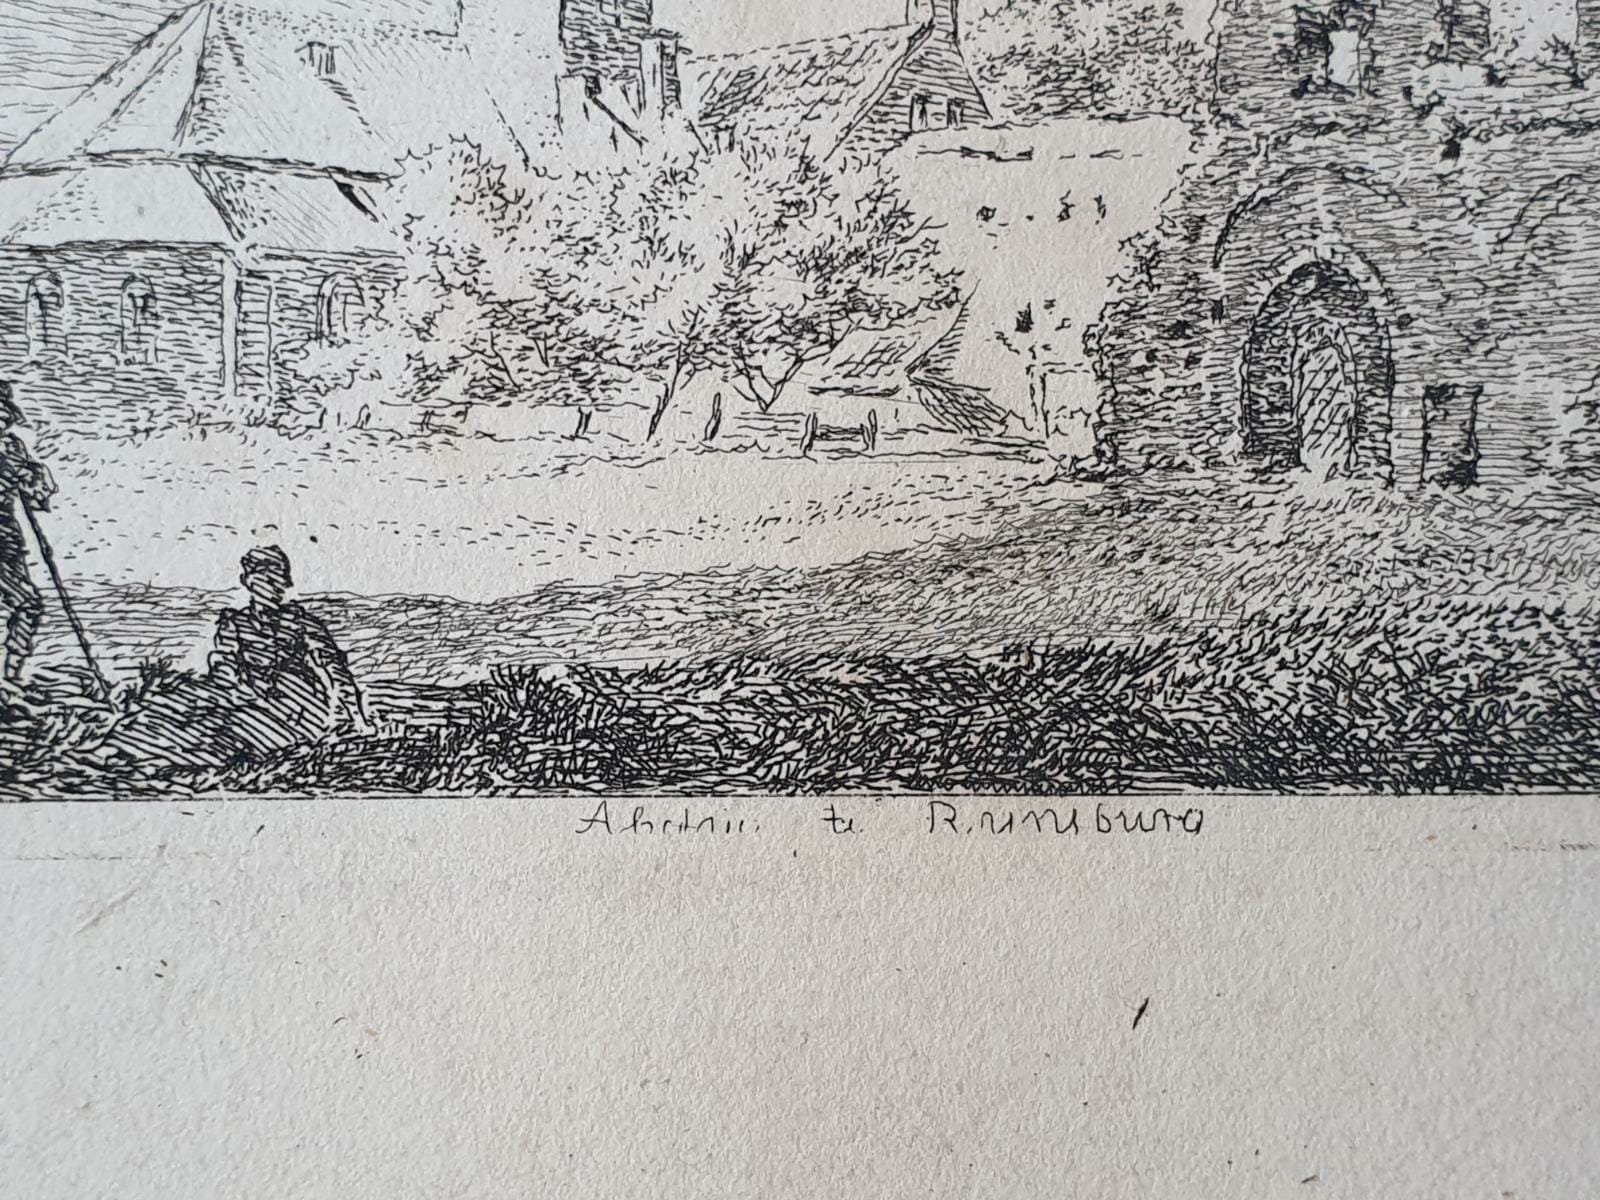 [Antique print, etching] Abbey at Rynsburg / Abdij te Rynsburg, published around 1815.